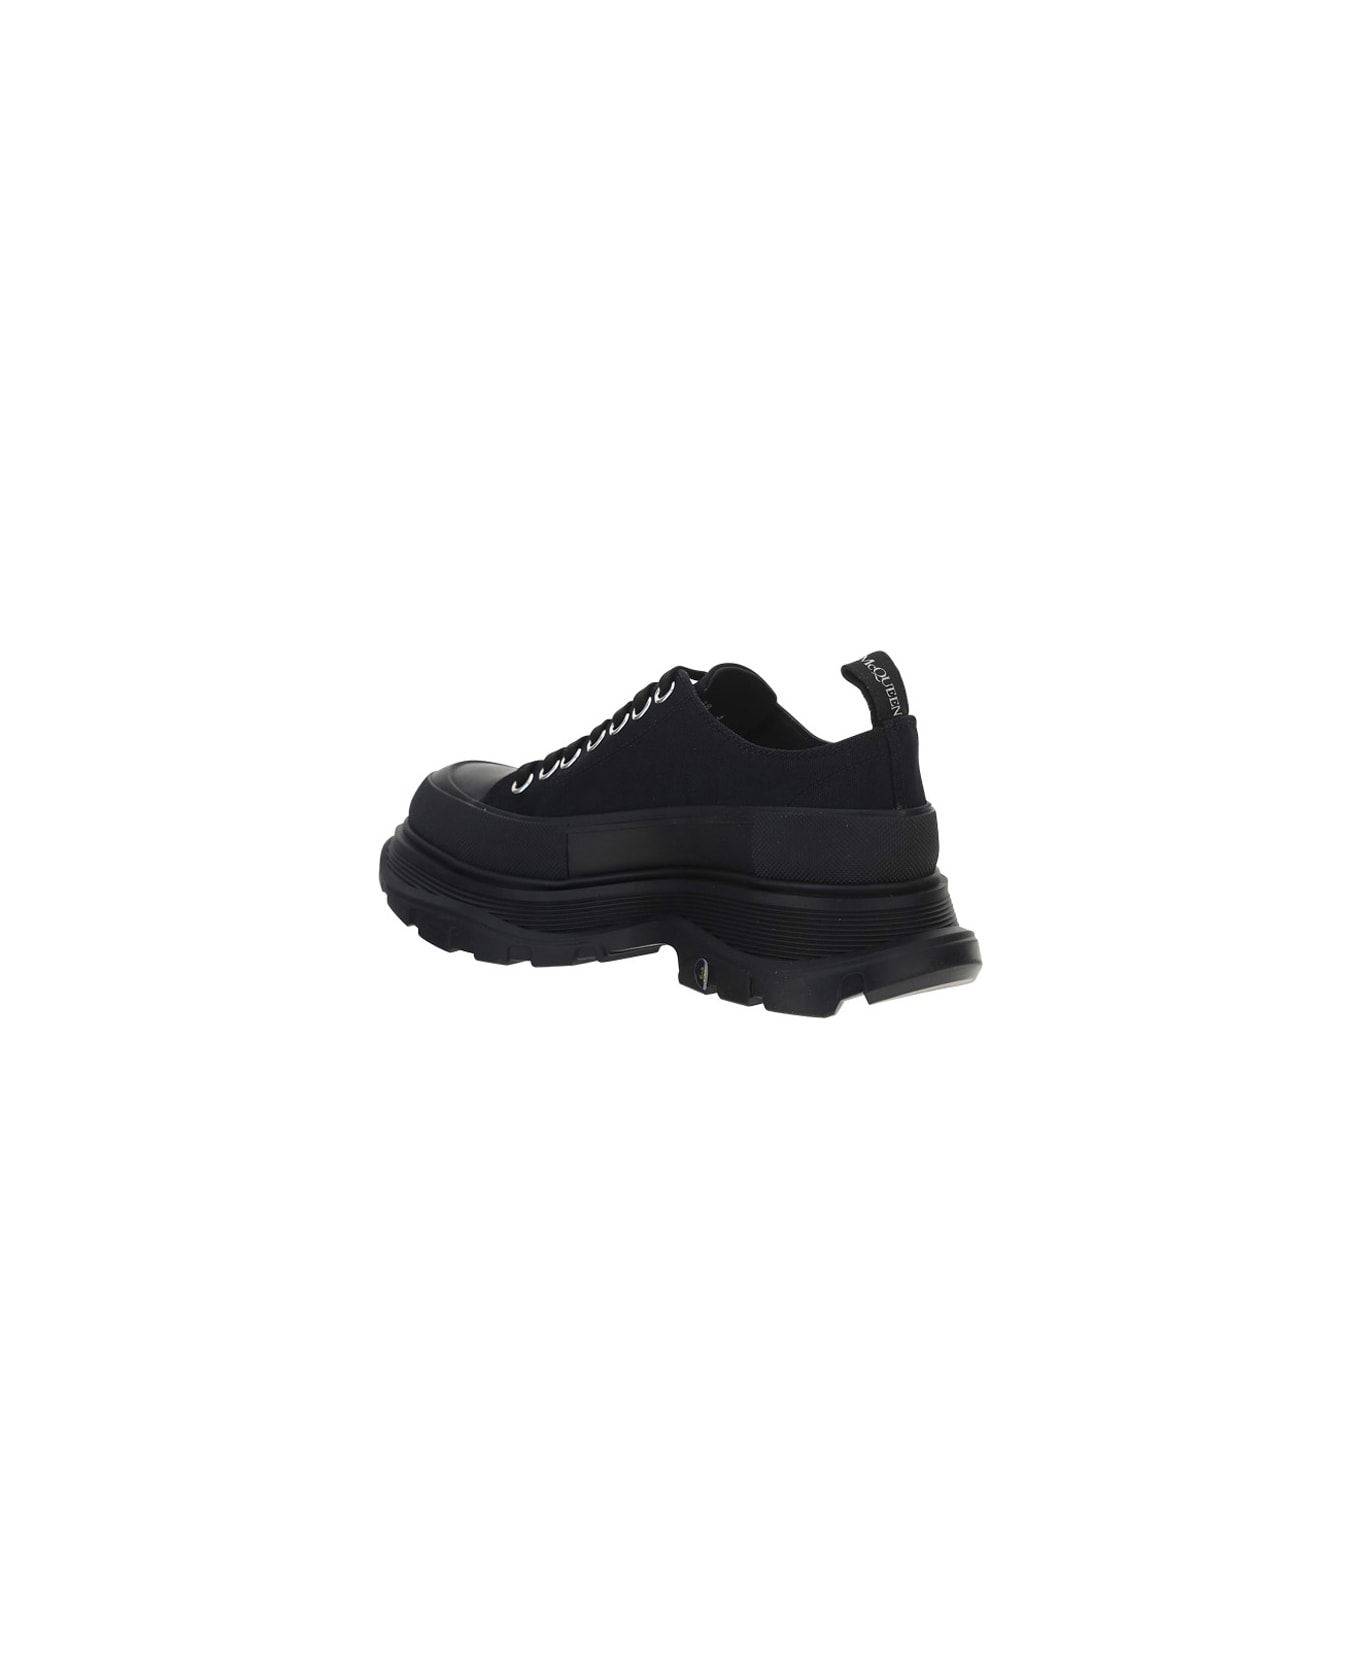 Alexander McQueen Tread Slick Laced Up Shoes - Black/black